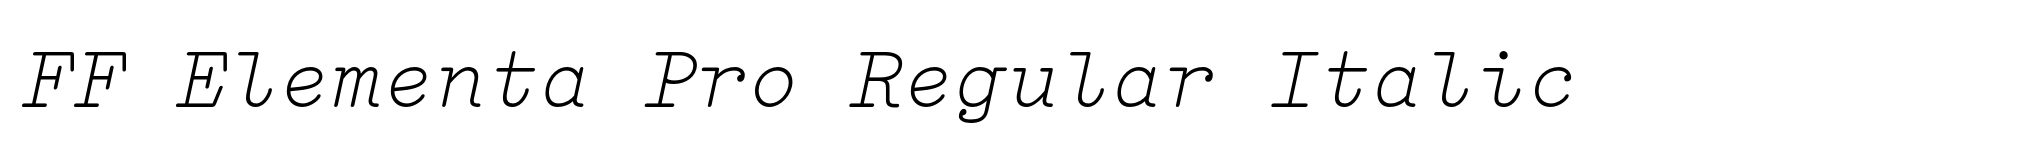 FF Elementa Pro Regular Italic image